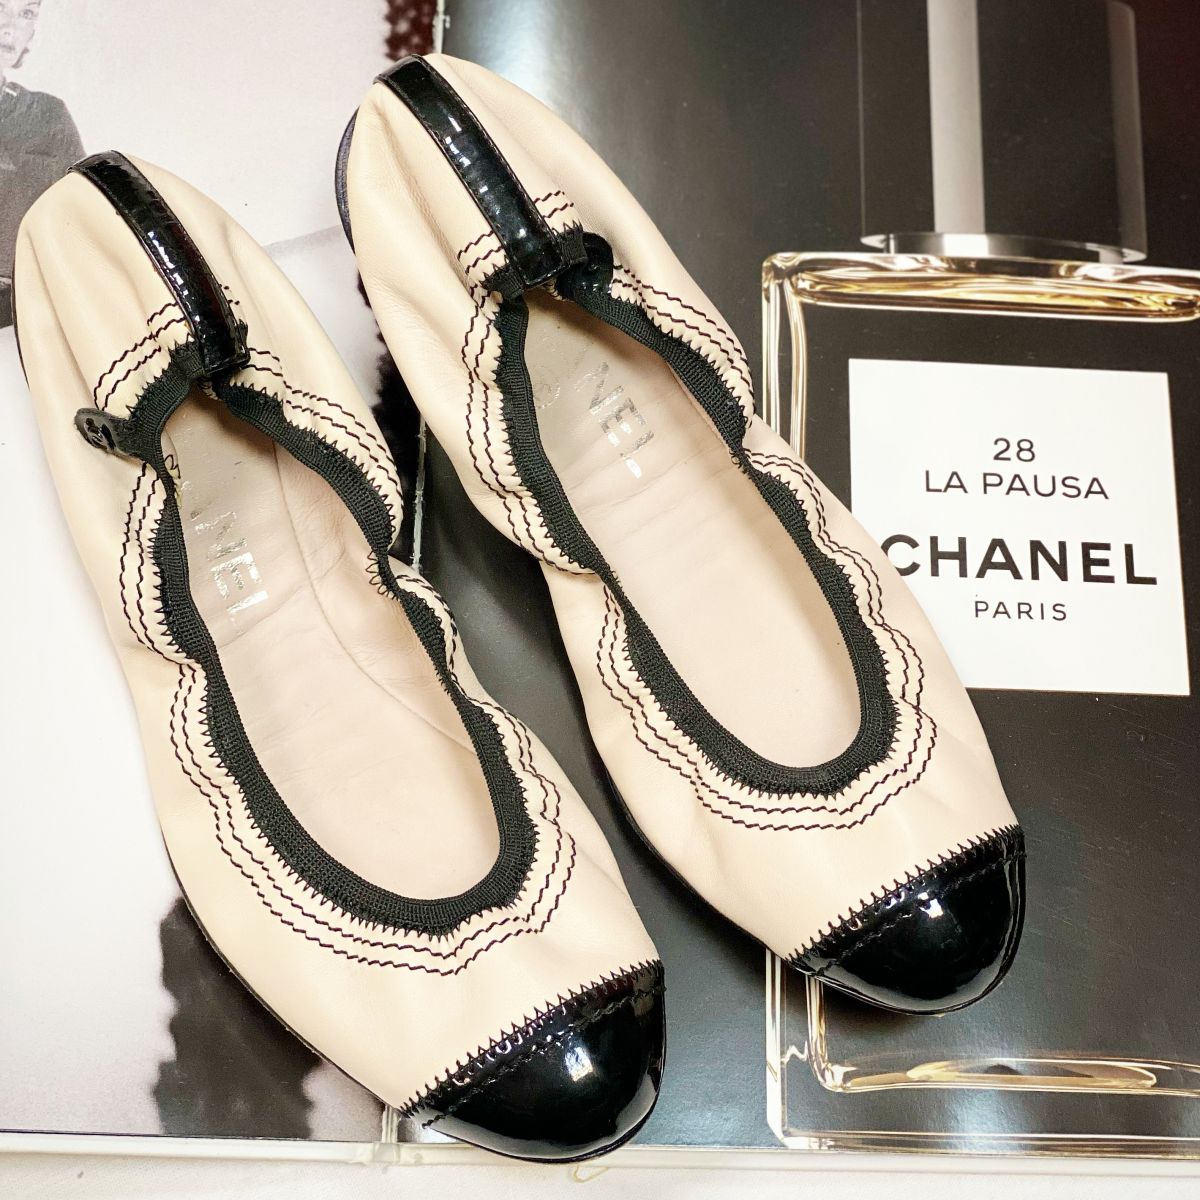 Балетки Chanel размер 37.5 цена 15 385 руб 